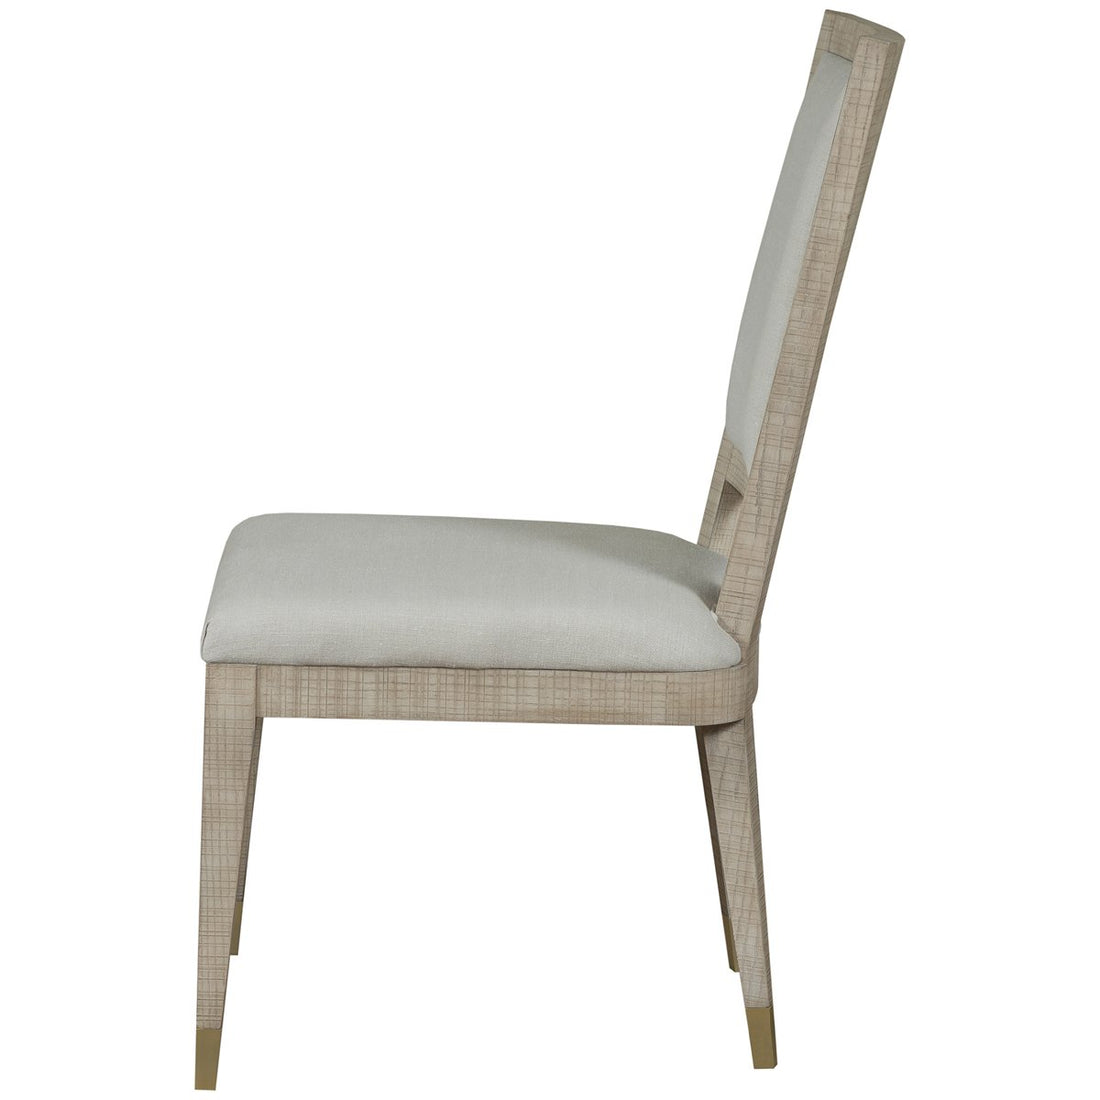 Sonder Living Raffles Dining Chair - Natural, Norman Ivory